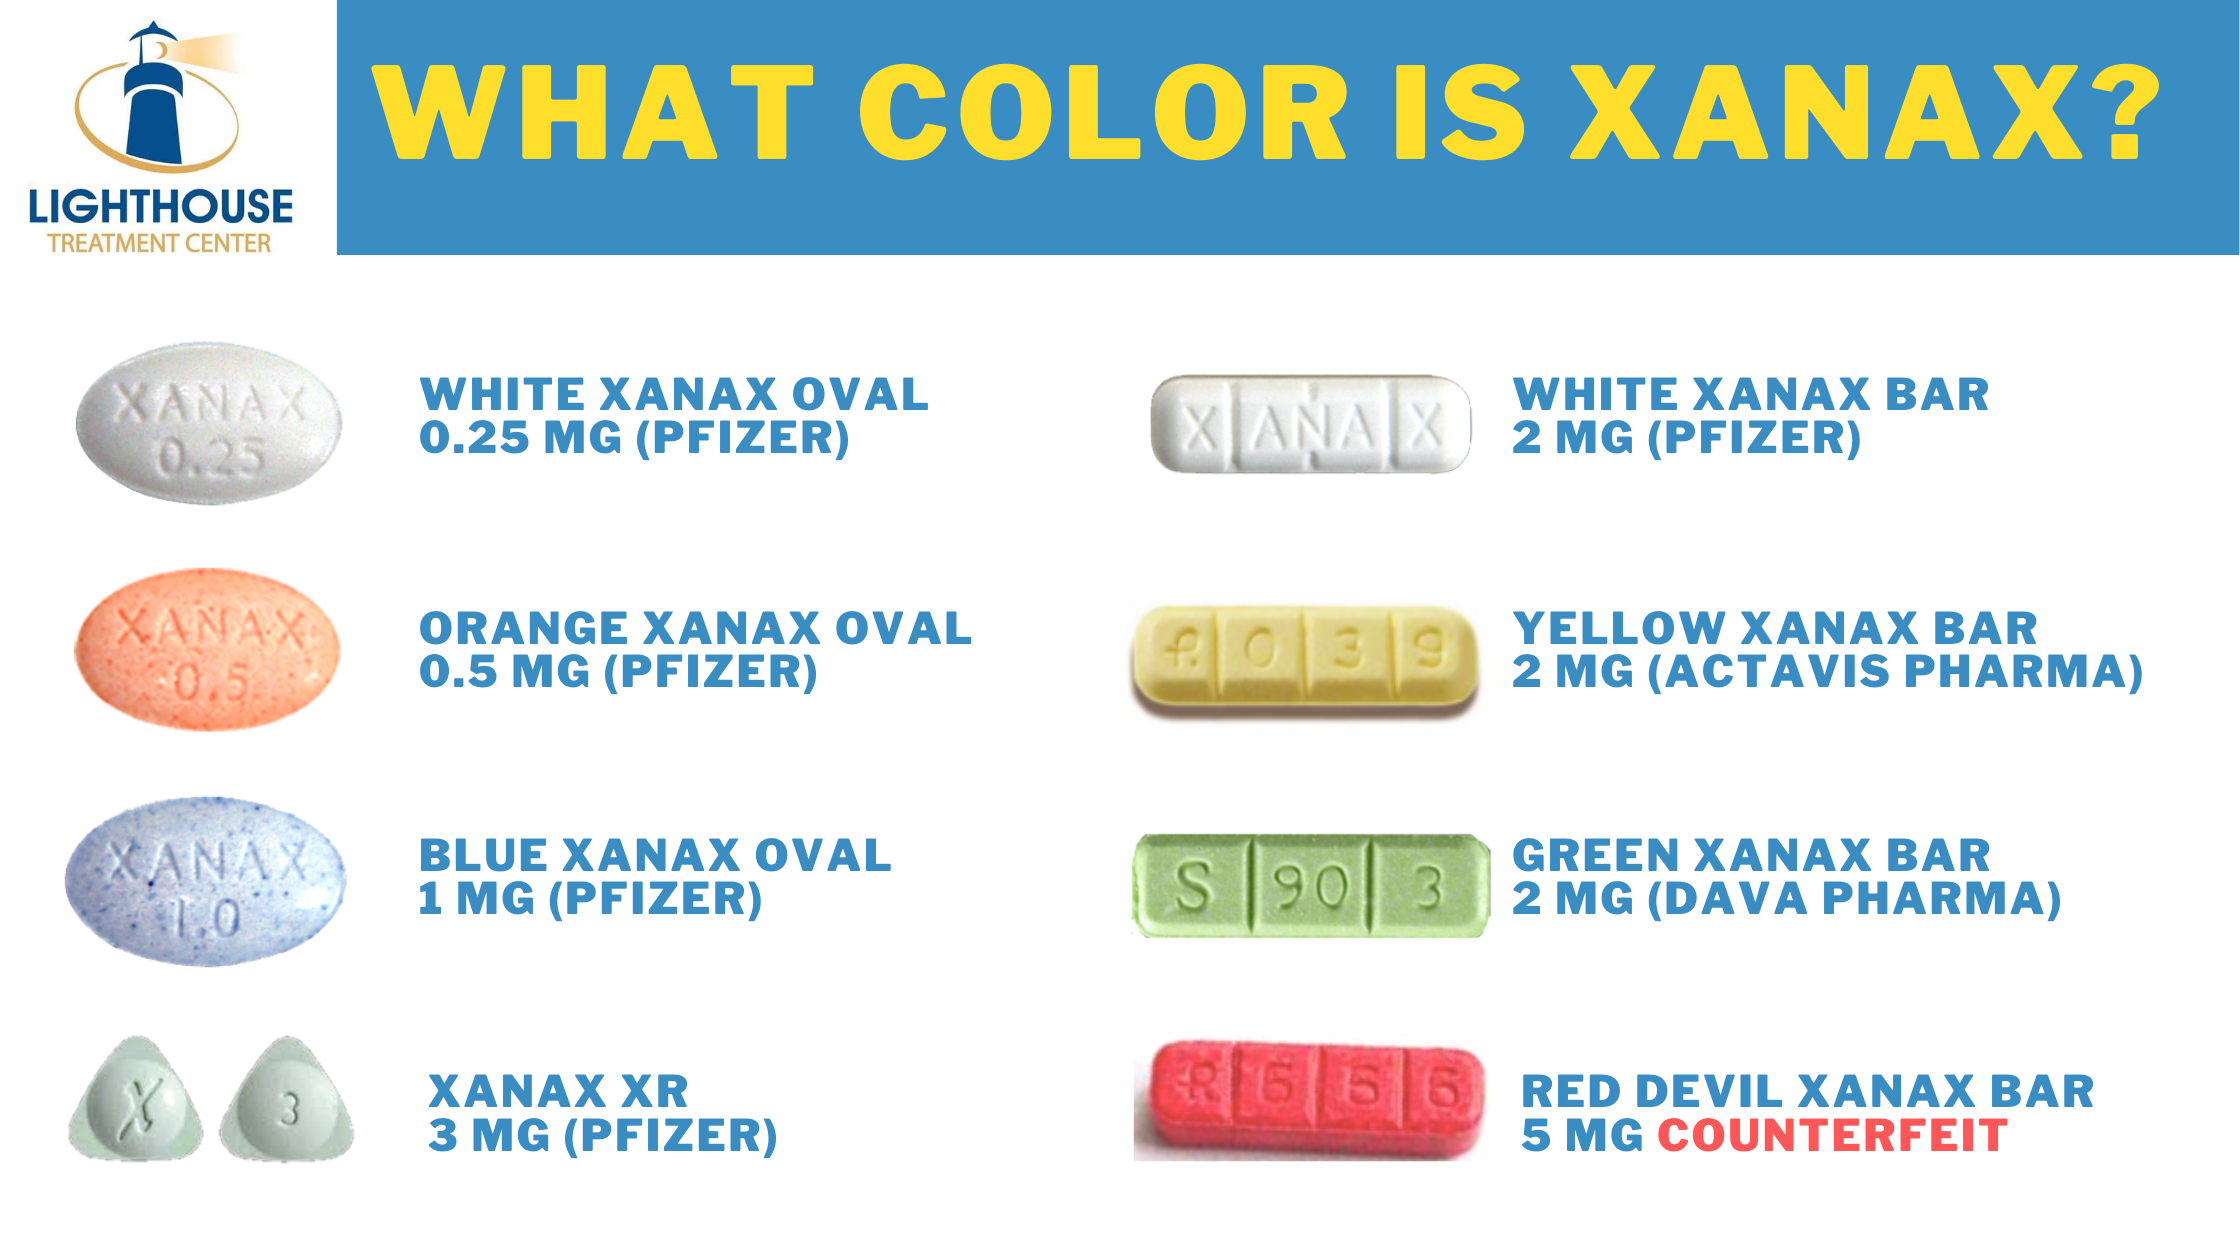 Green Xanax 2 Mg, Yellow, 2mg Xanax, Alprazolam Tablets, 50 Tablet